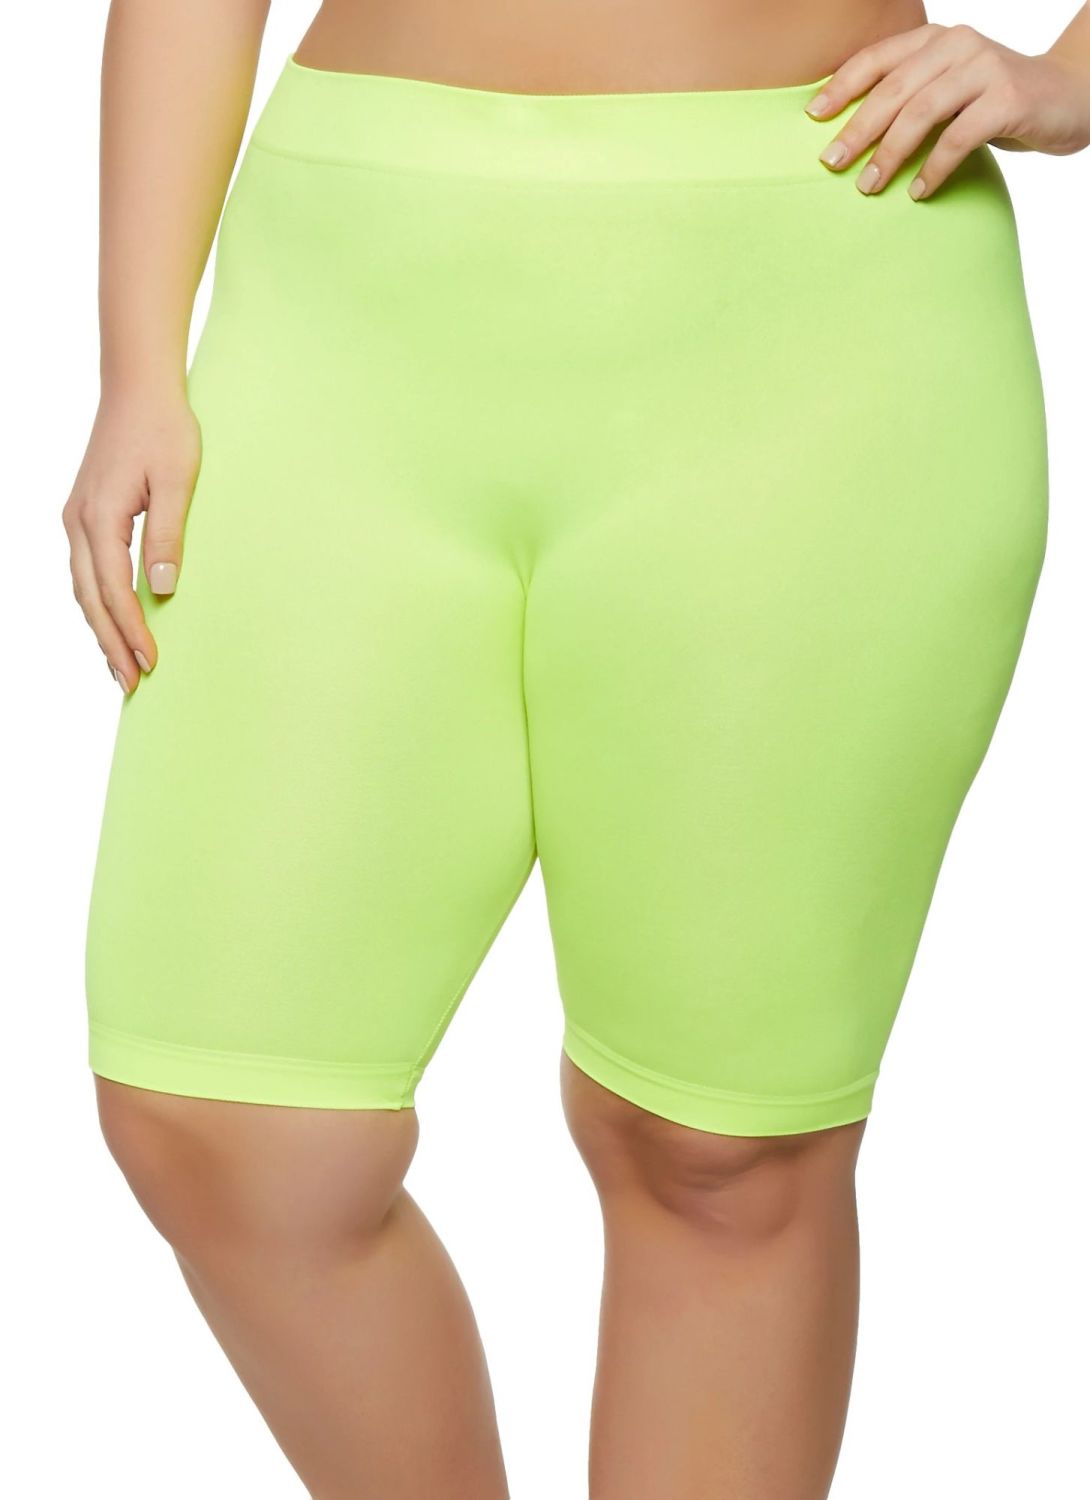 Neon Yellow Seamless Biker Shorts Size: 1X/2X